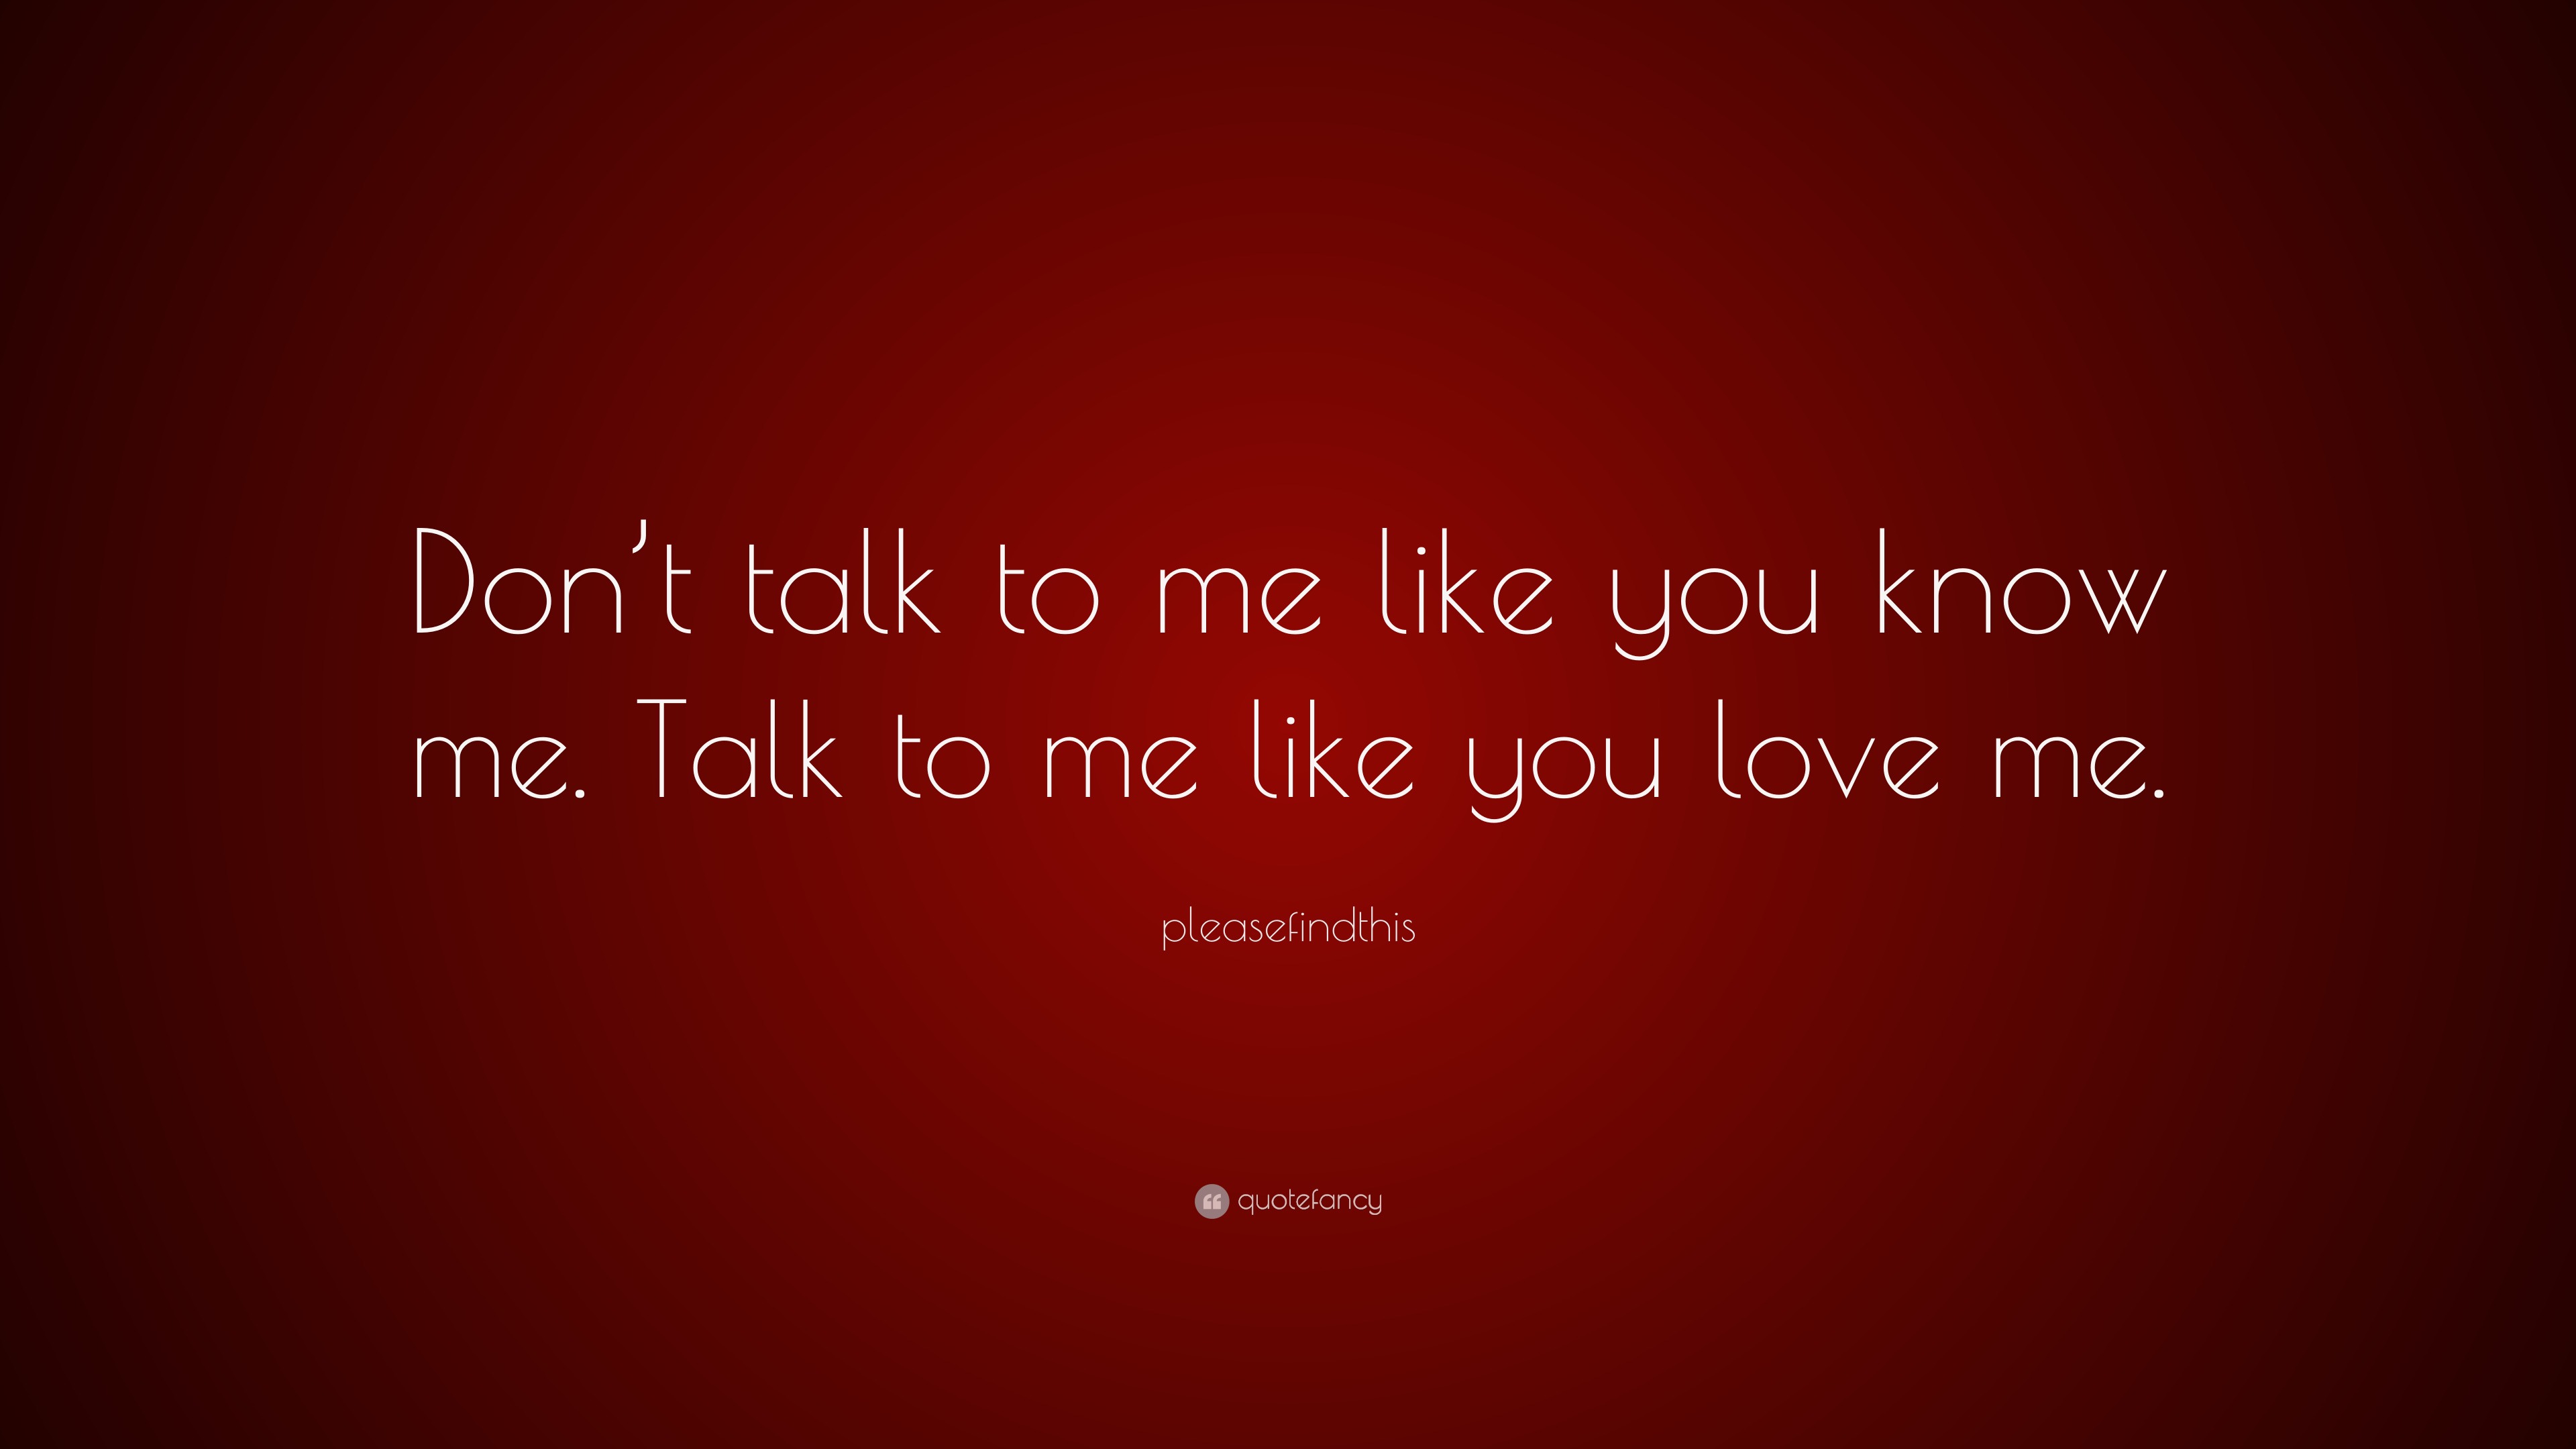 Talk to me like someone you love